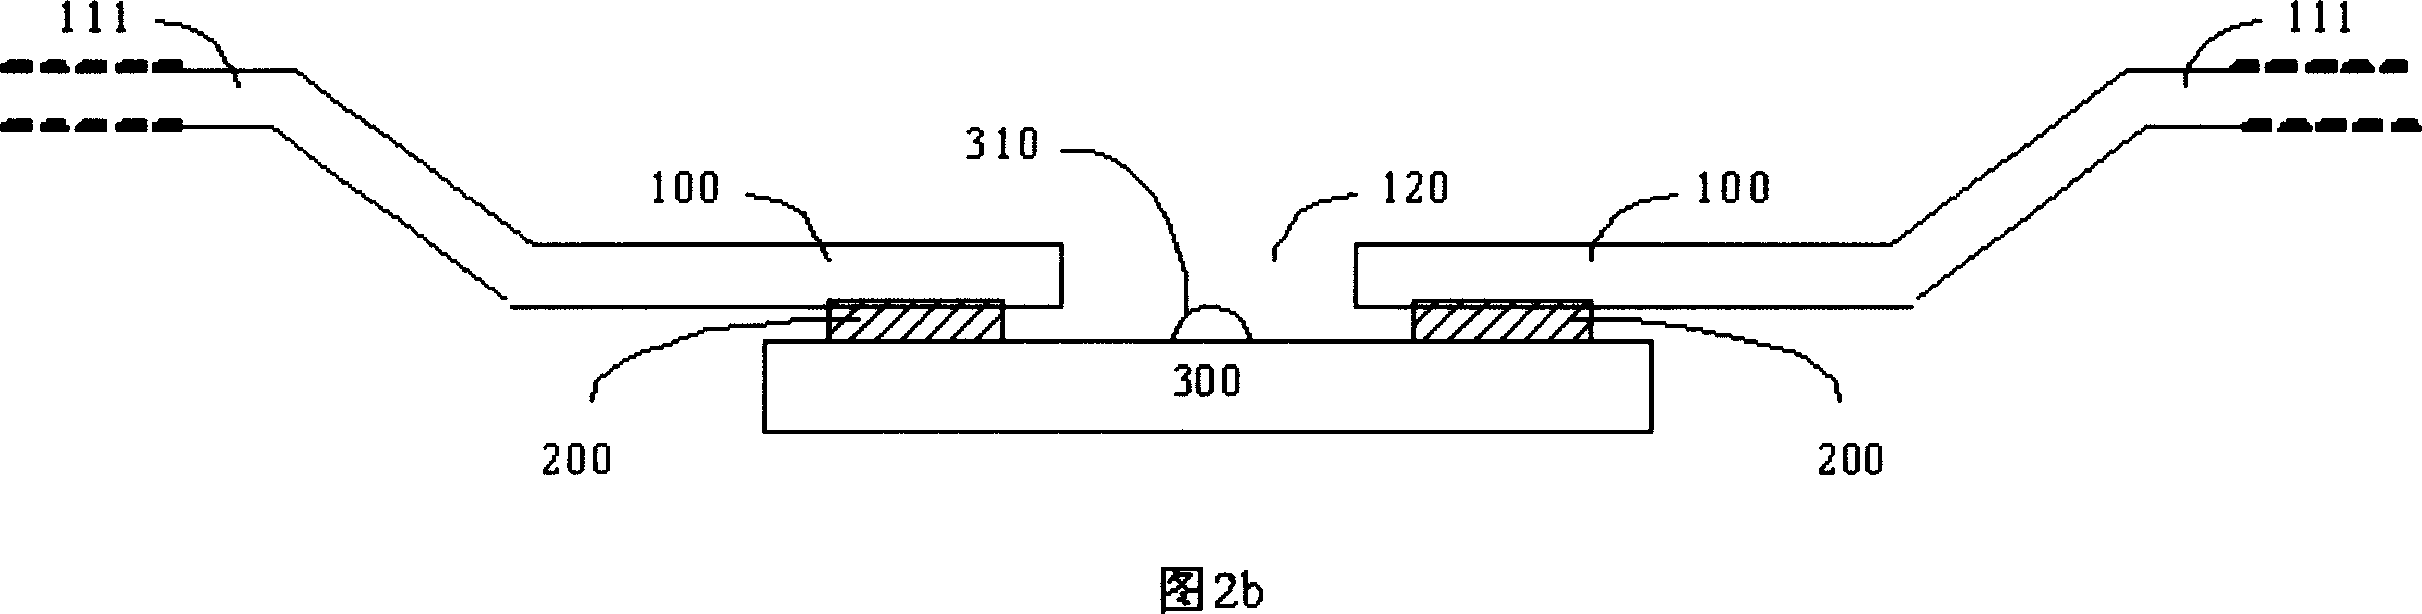 Lead frame chip-level encapsulation method